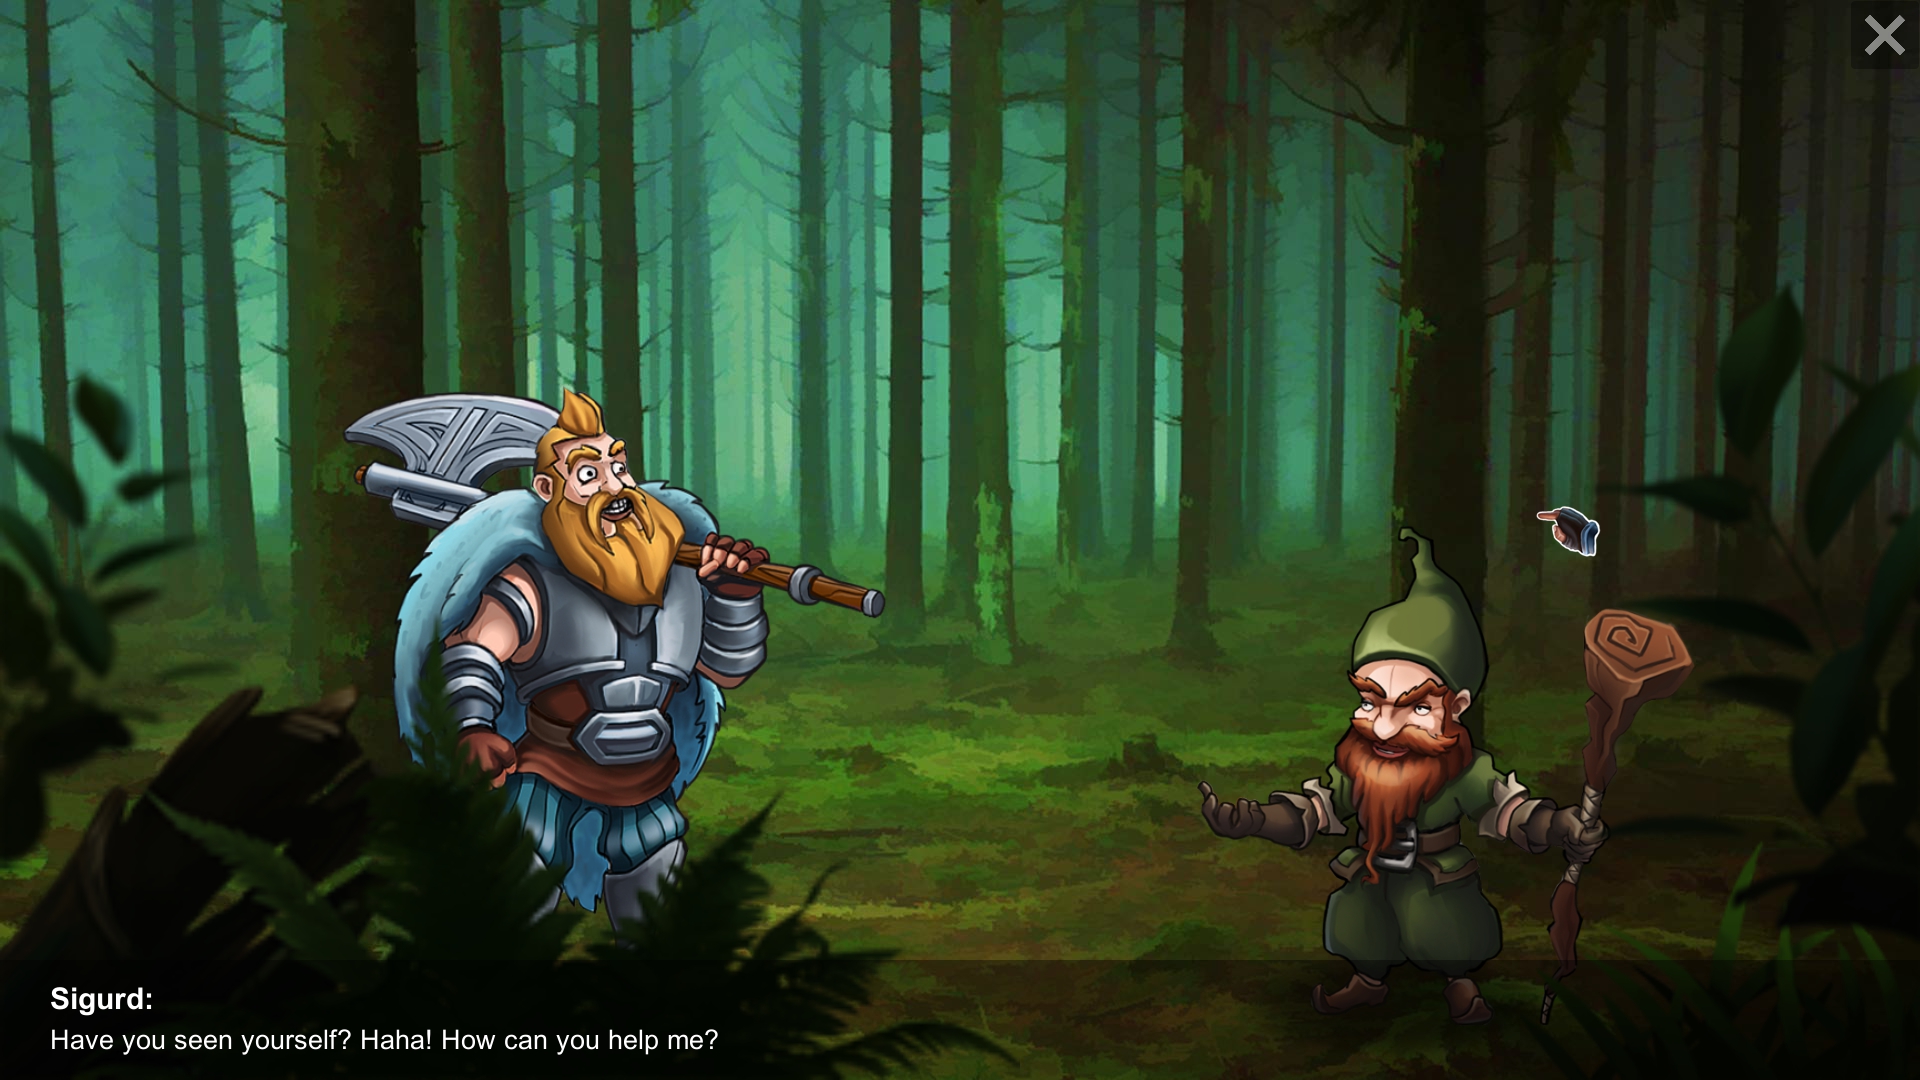 Viking: Sigurd's Adventure Free Download